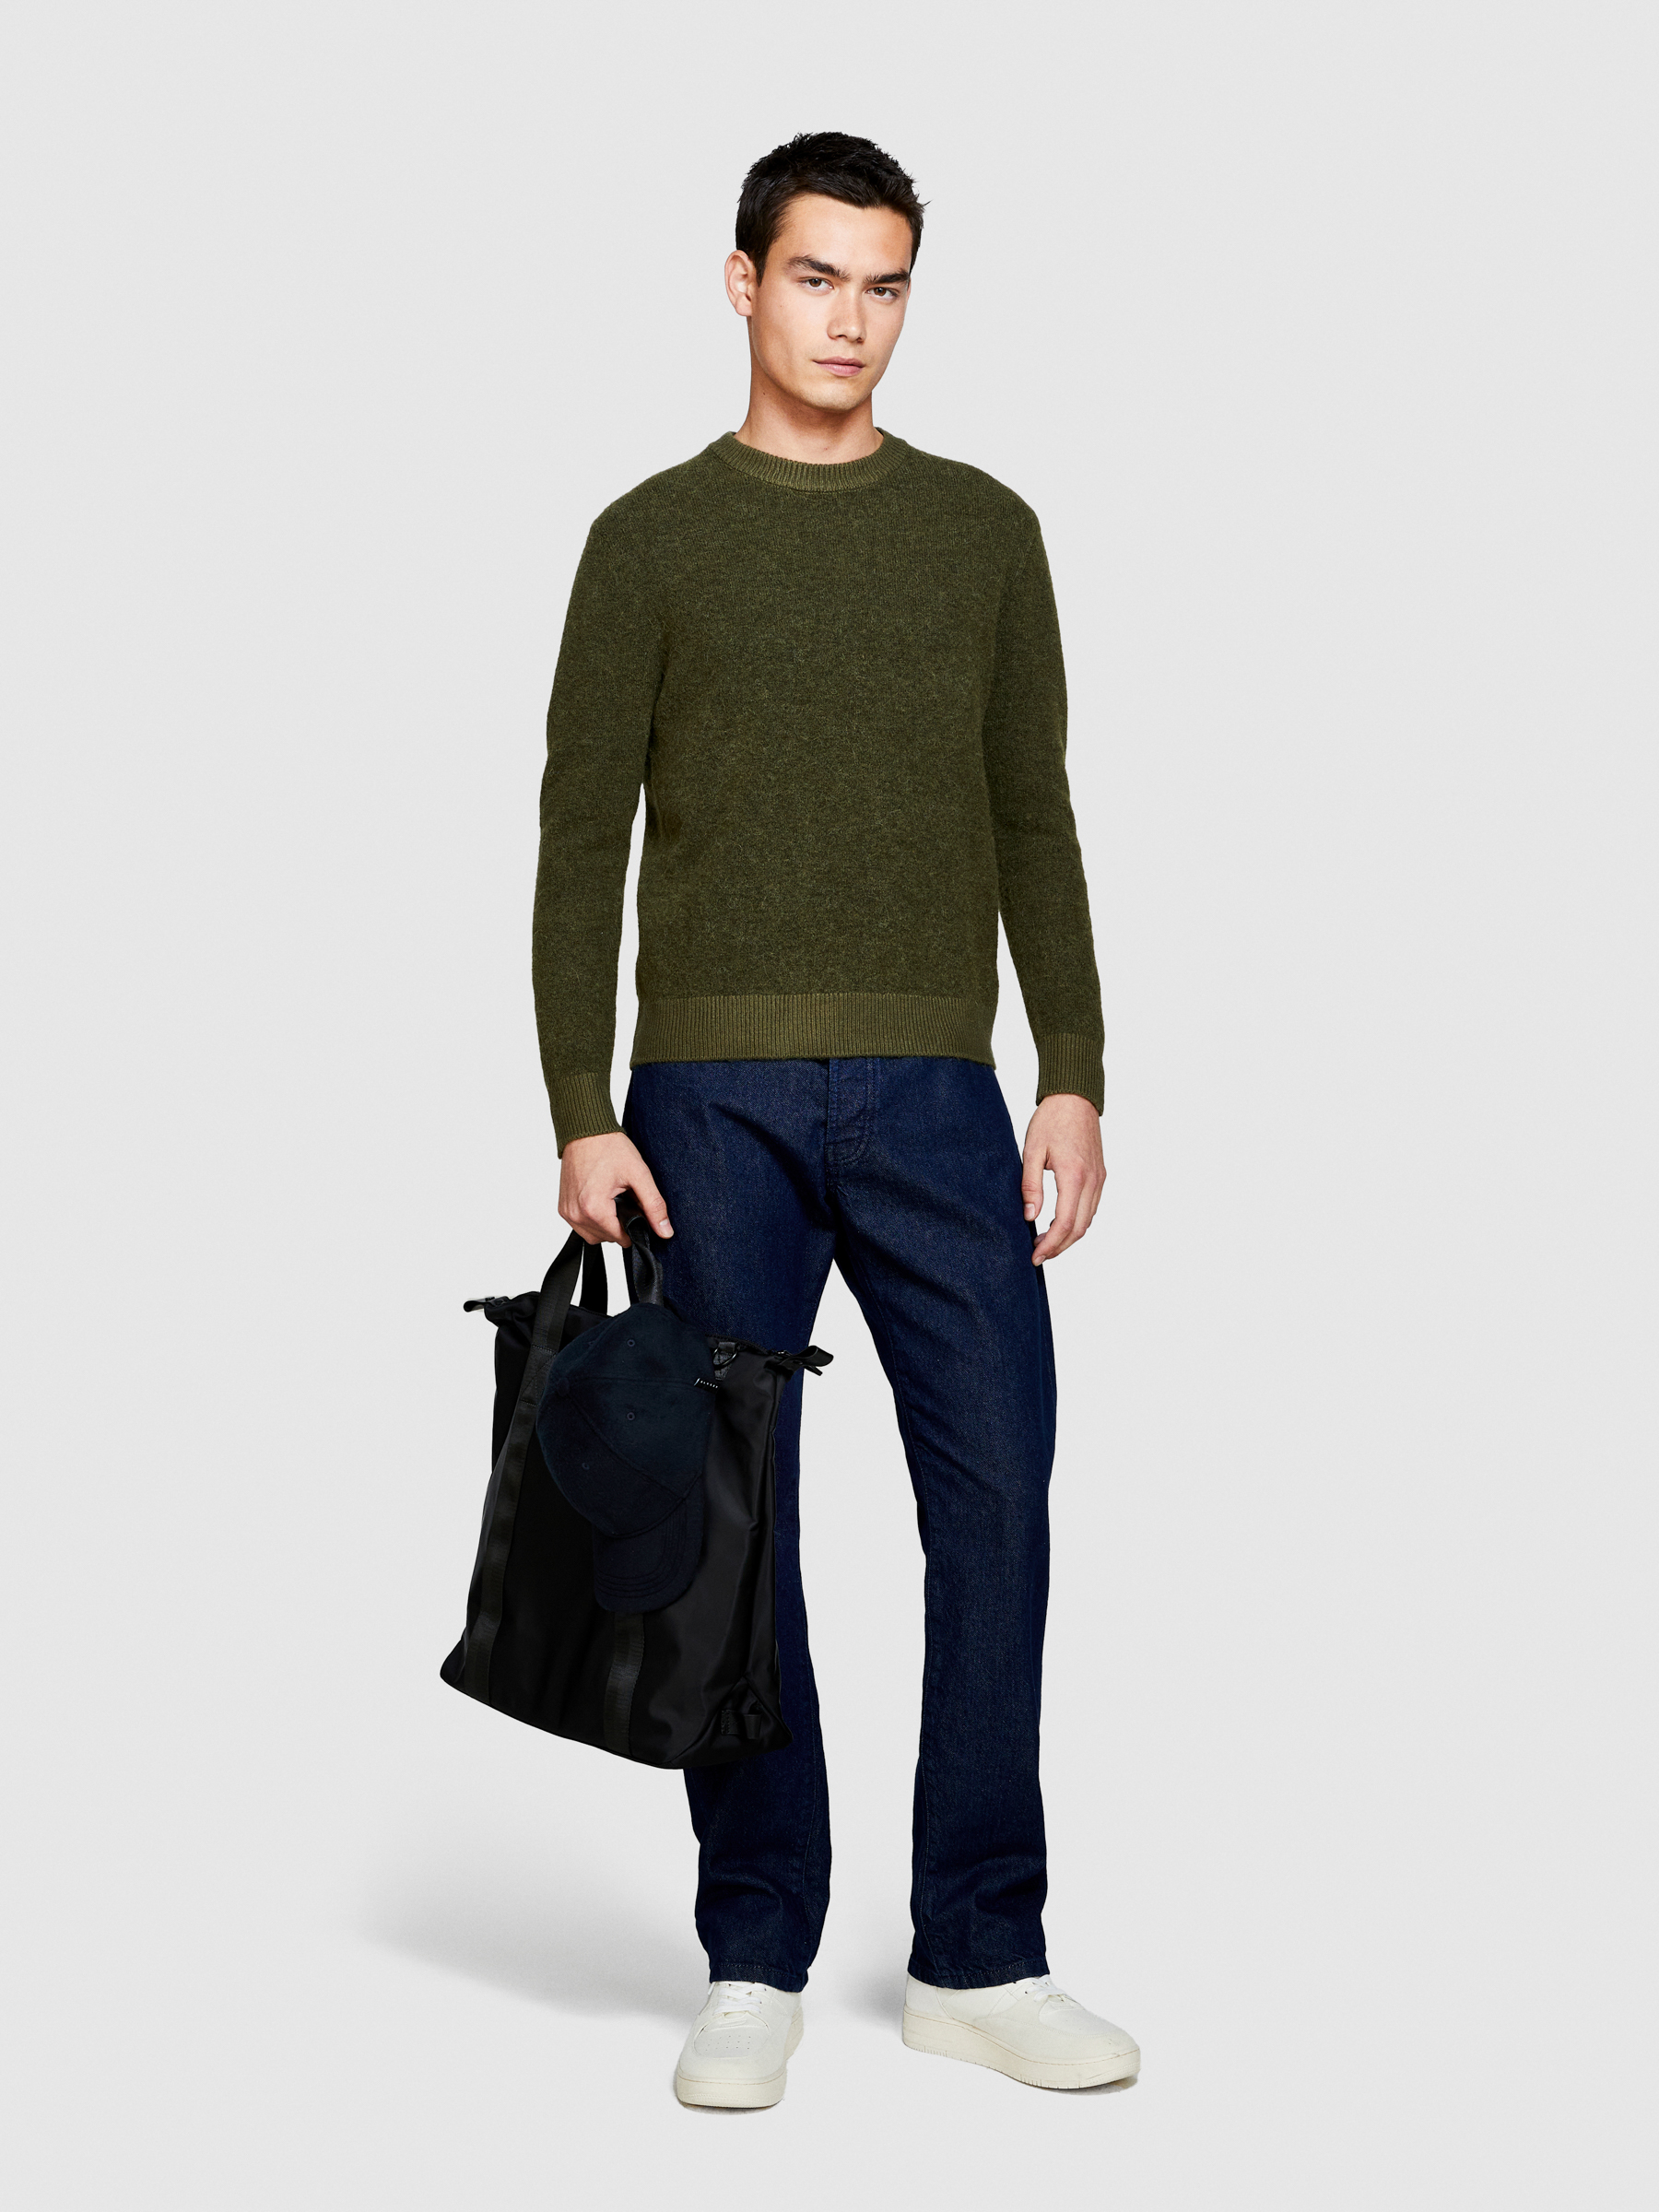 Sisley - Crew Neck Sweater, Man, Military Green, Size: M